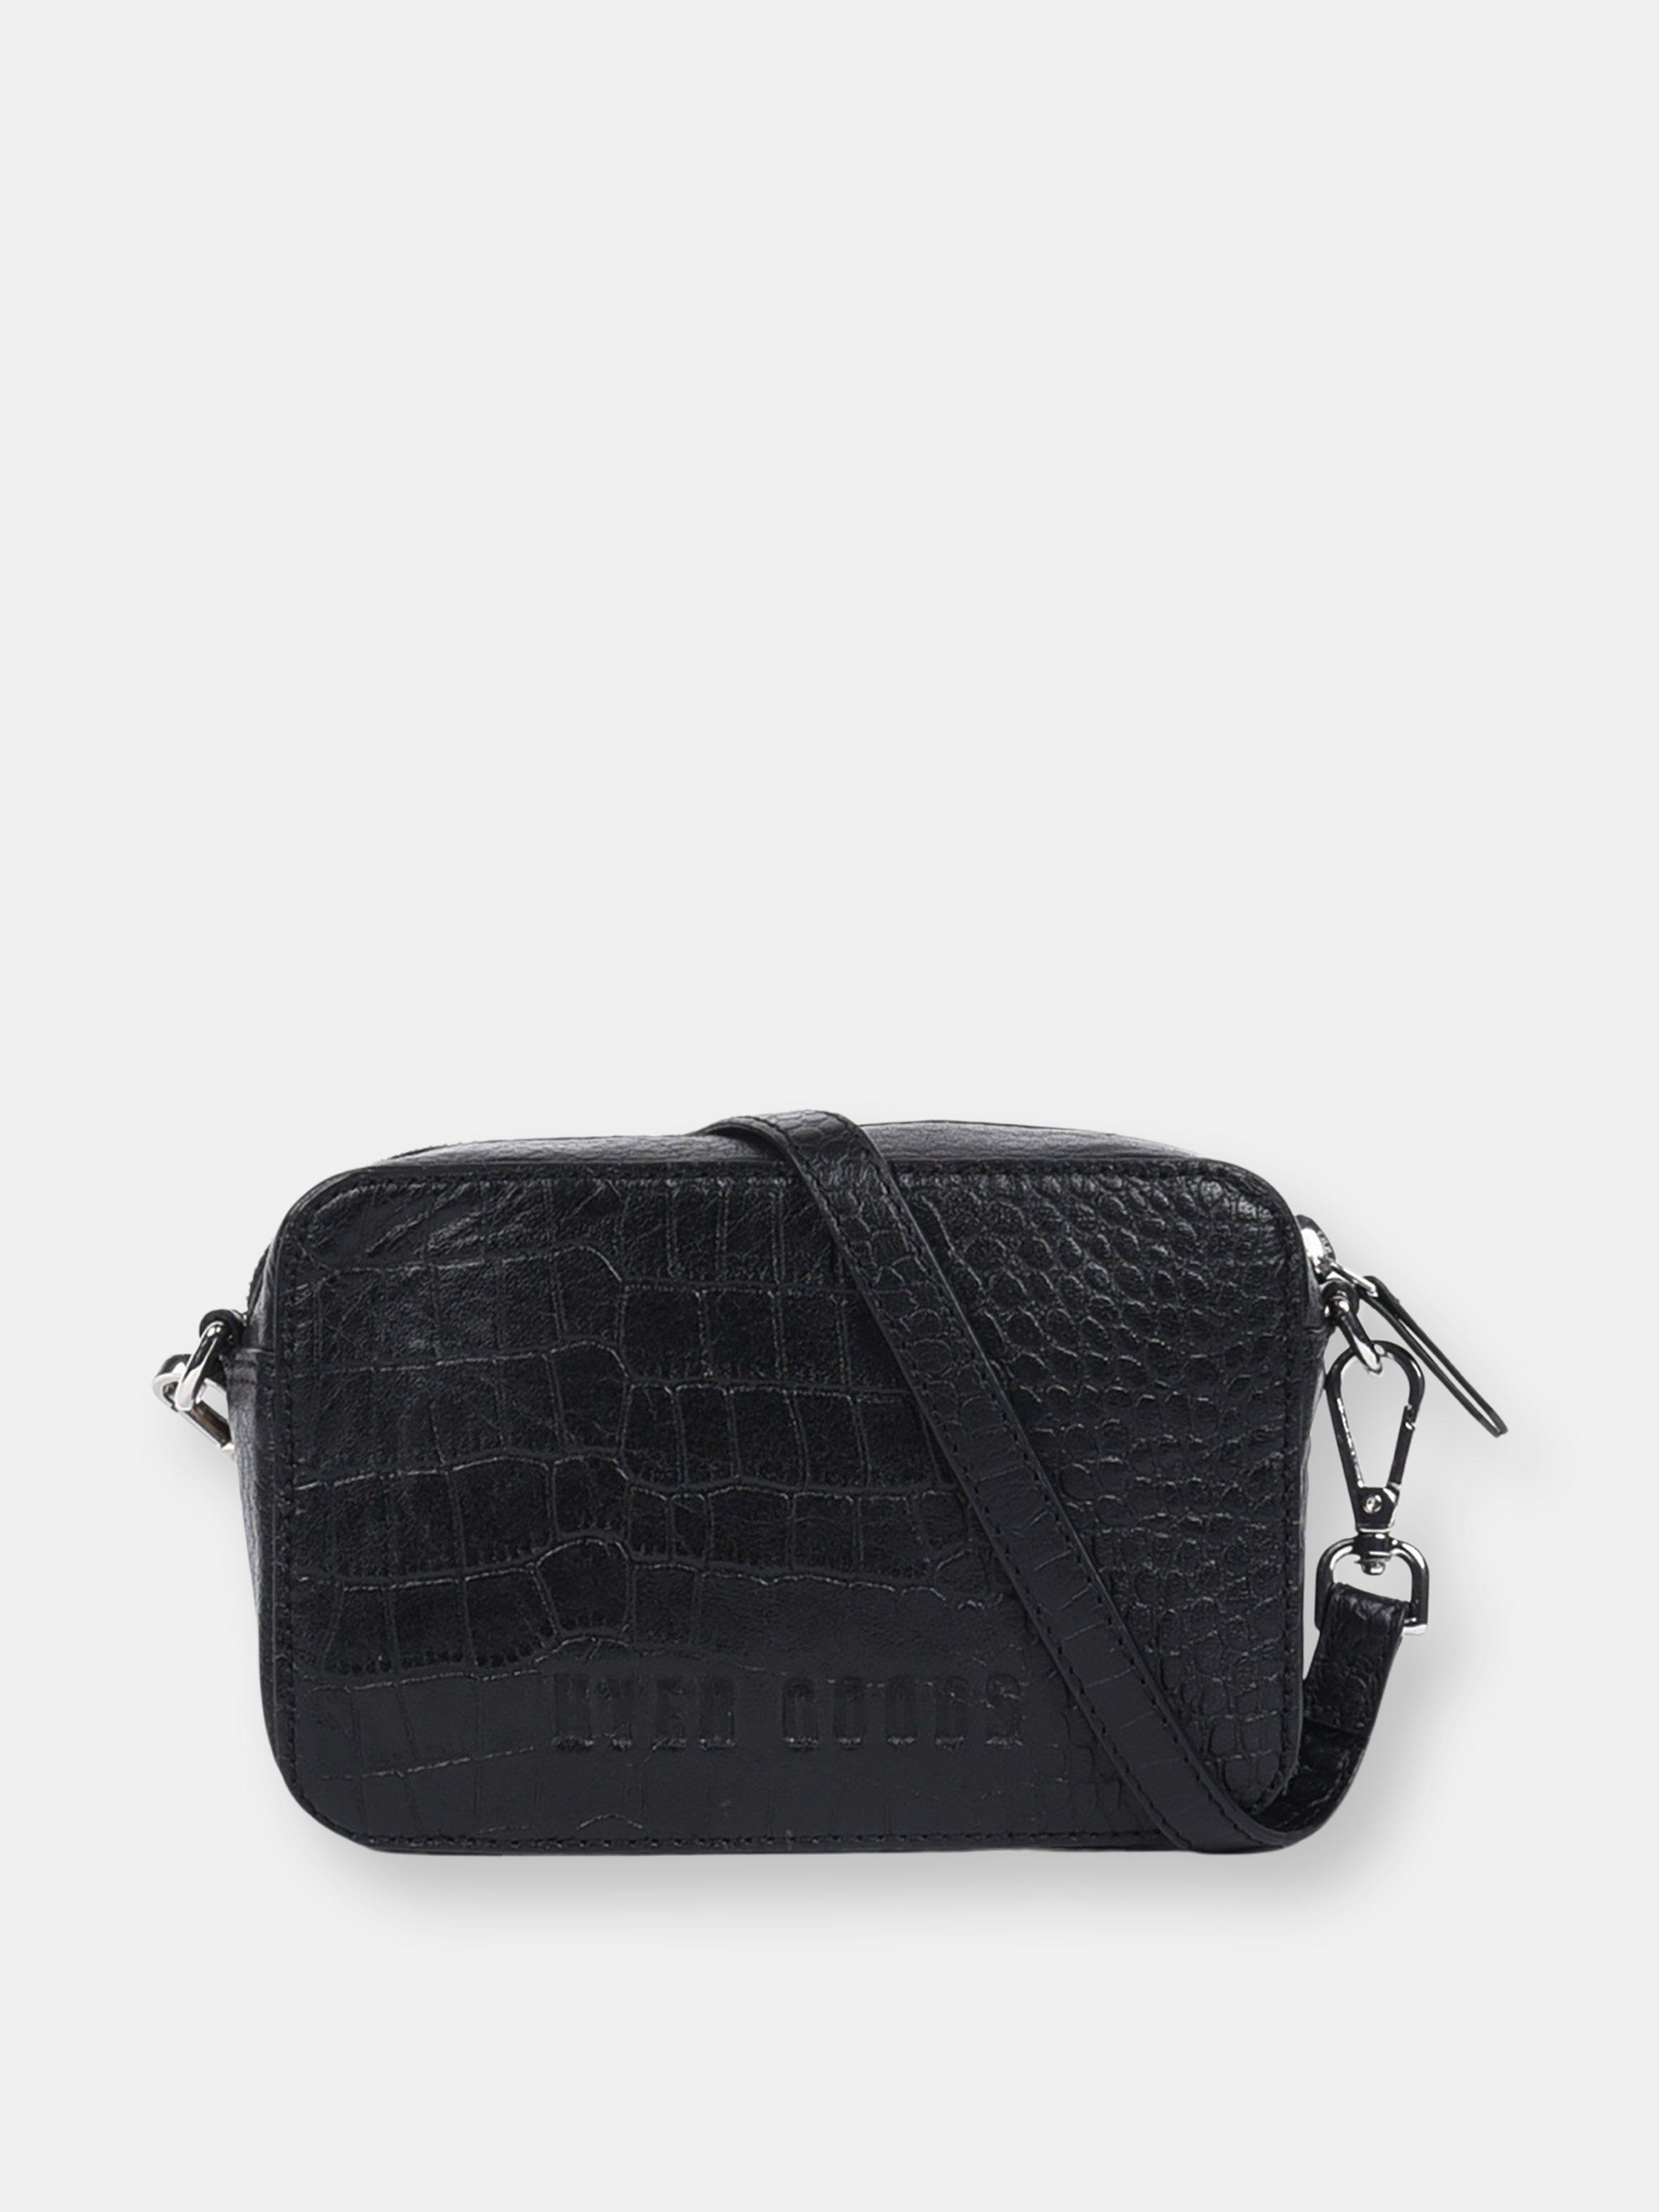 Camera Bag Black Croc | Verishop